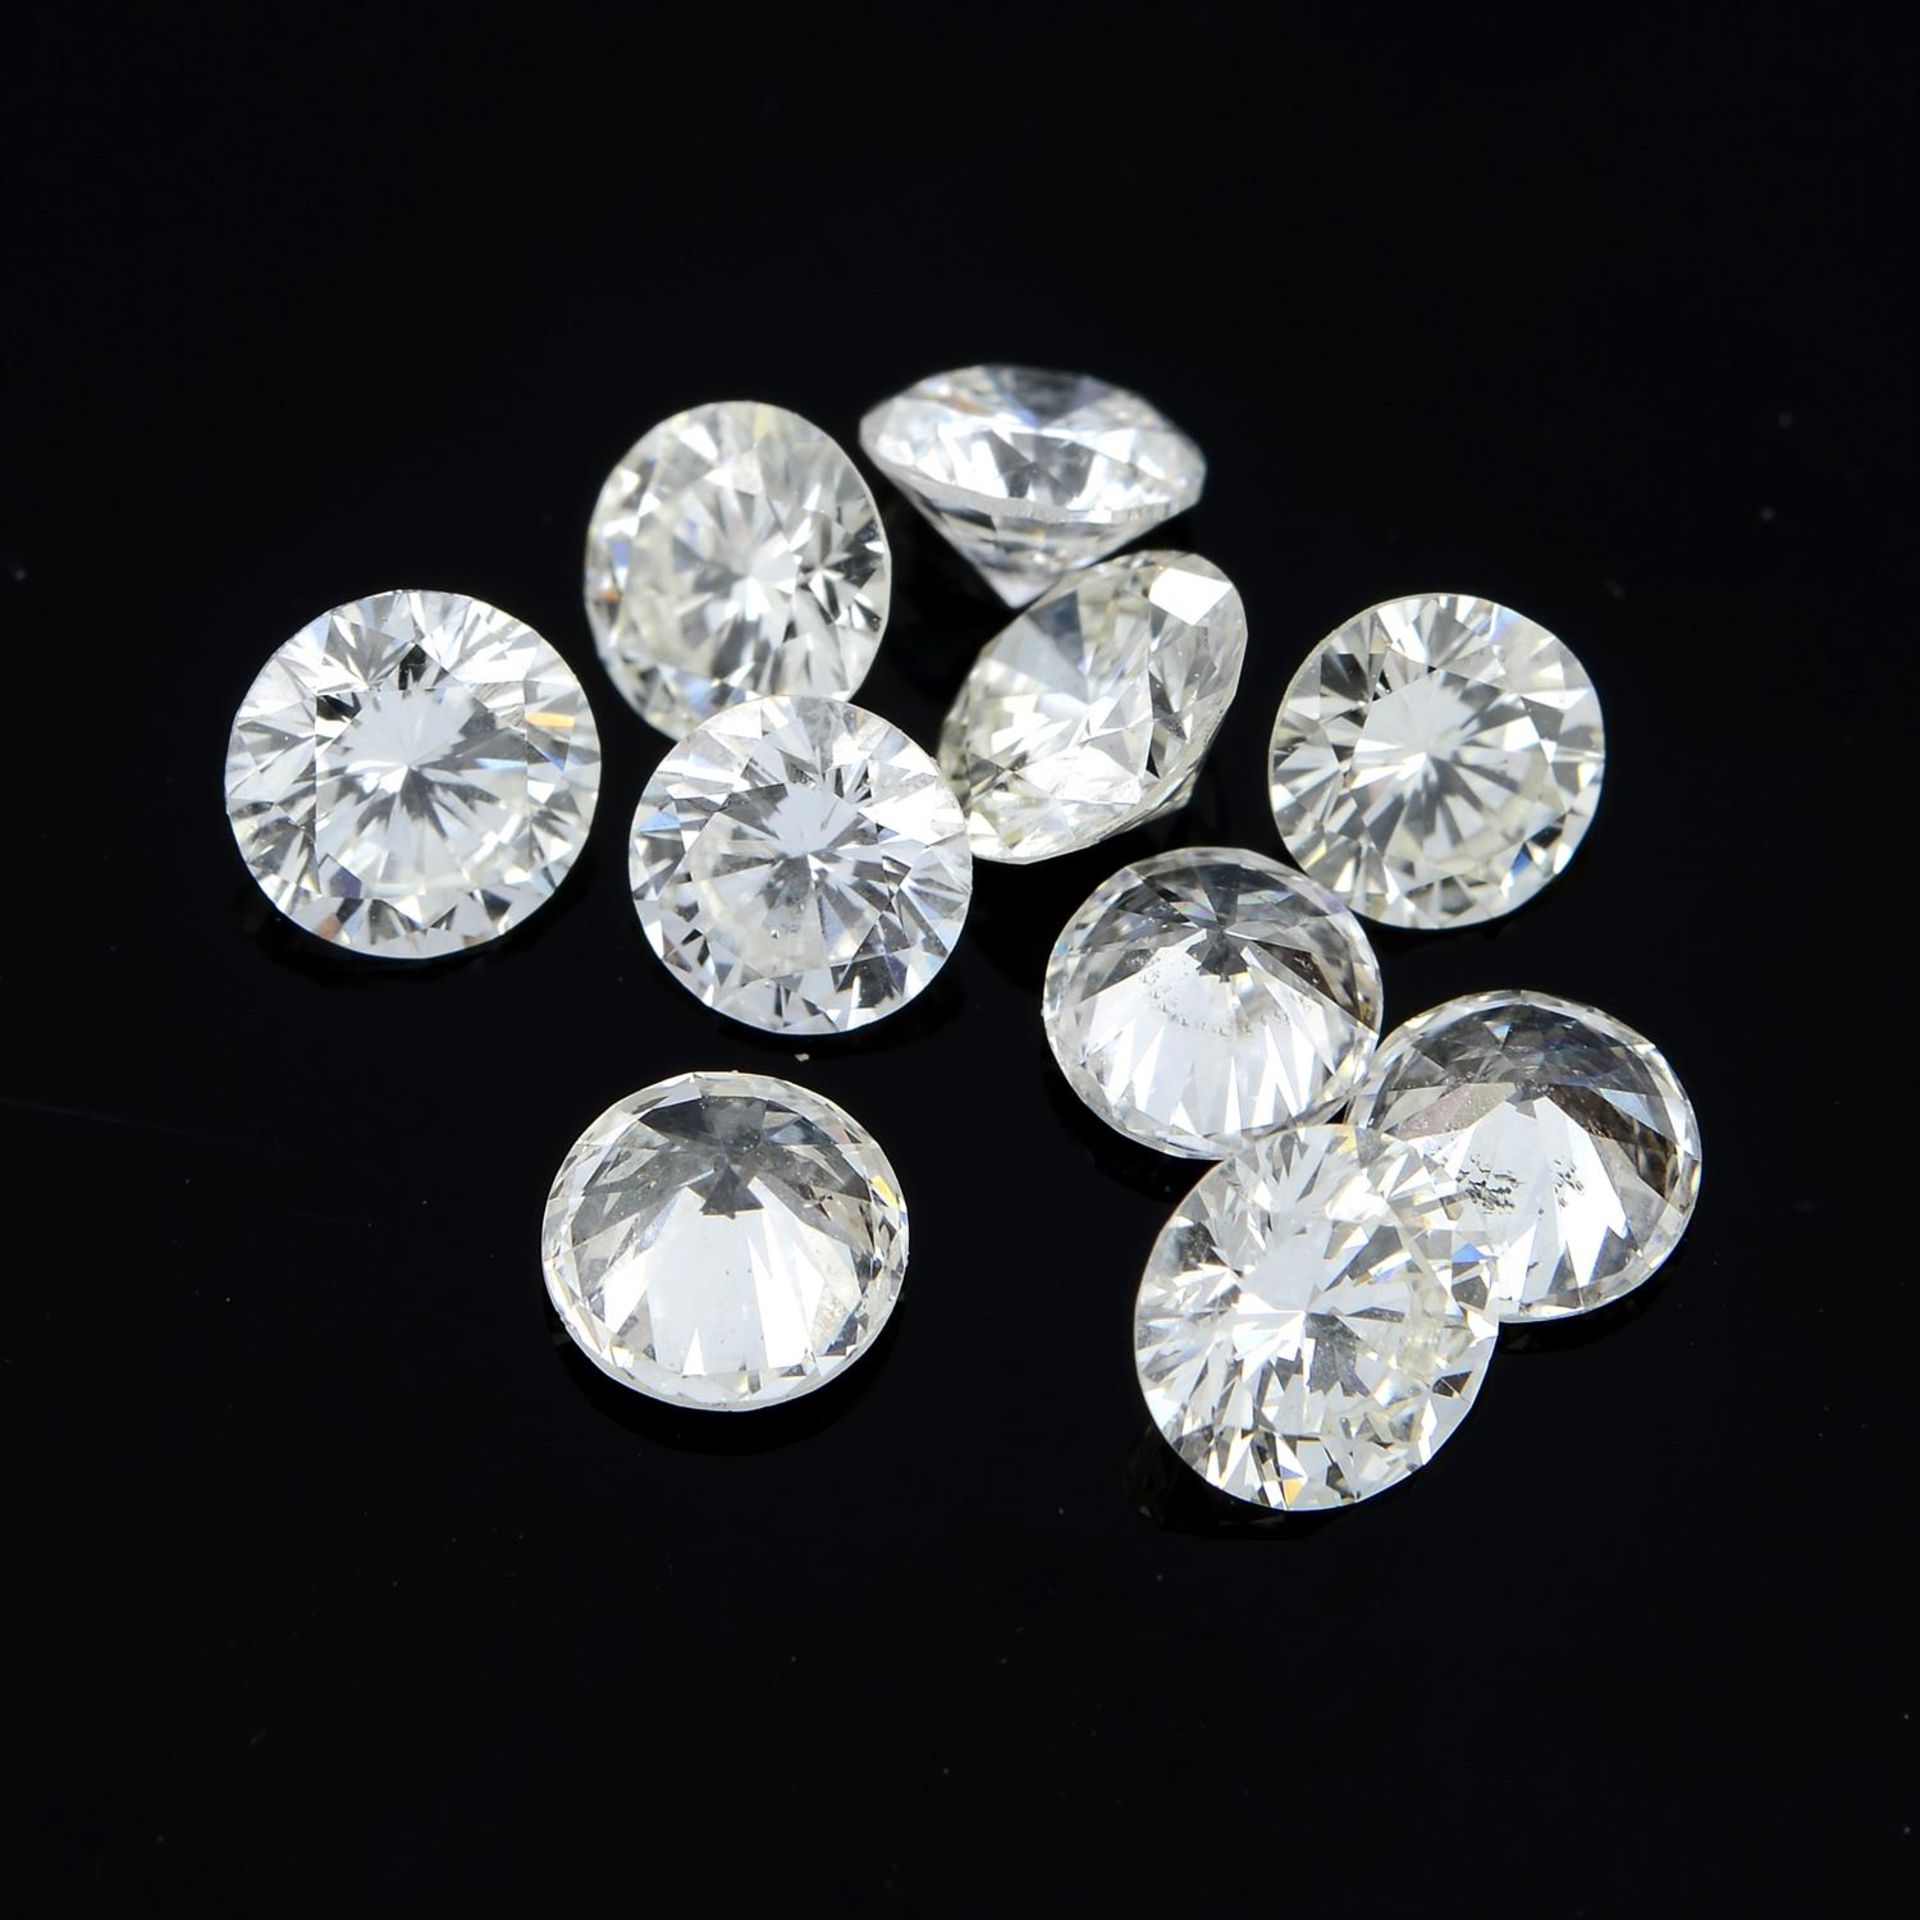 A selection of ten vari-cut diamonds, total weight 2.94cts.